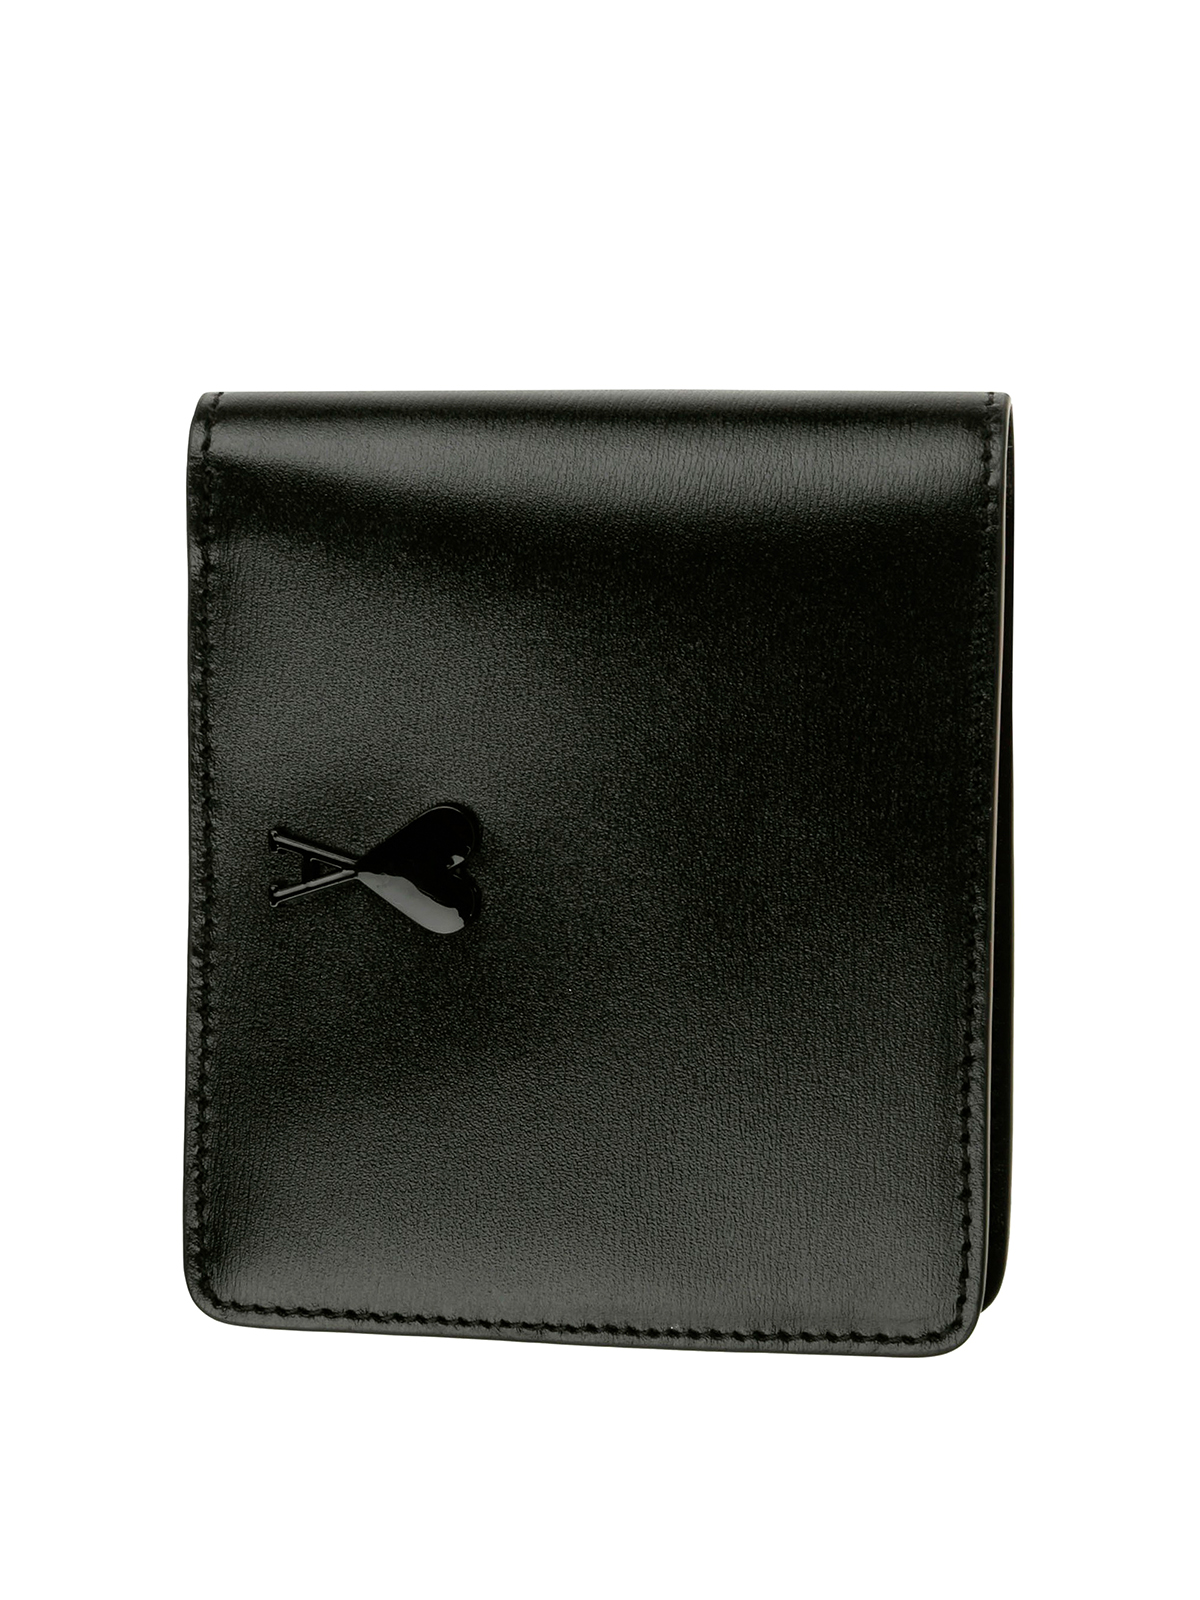 Ami Alexandre Mattiussi Leather Wallet In Black